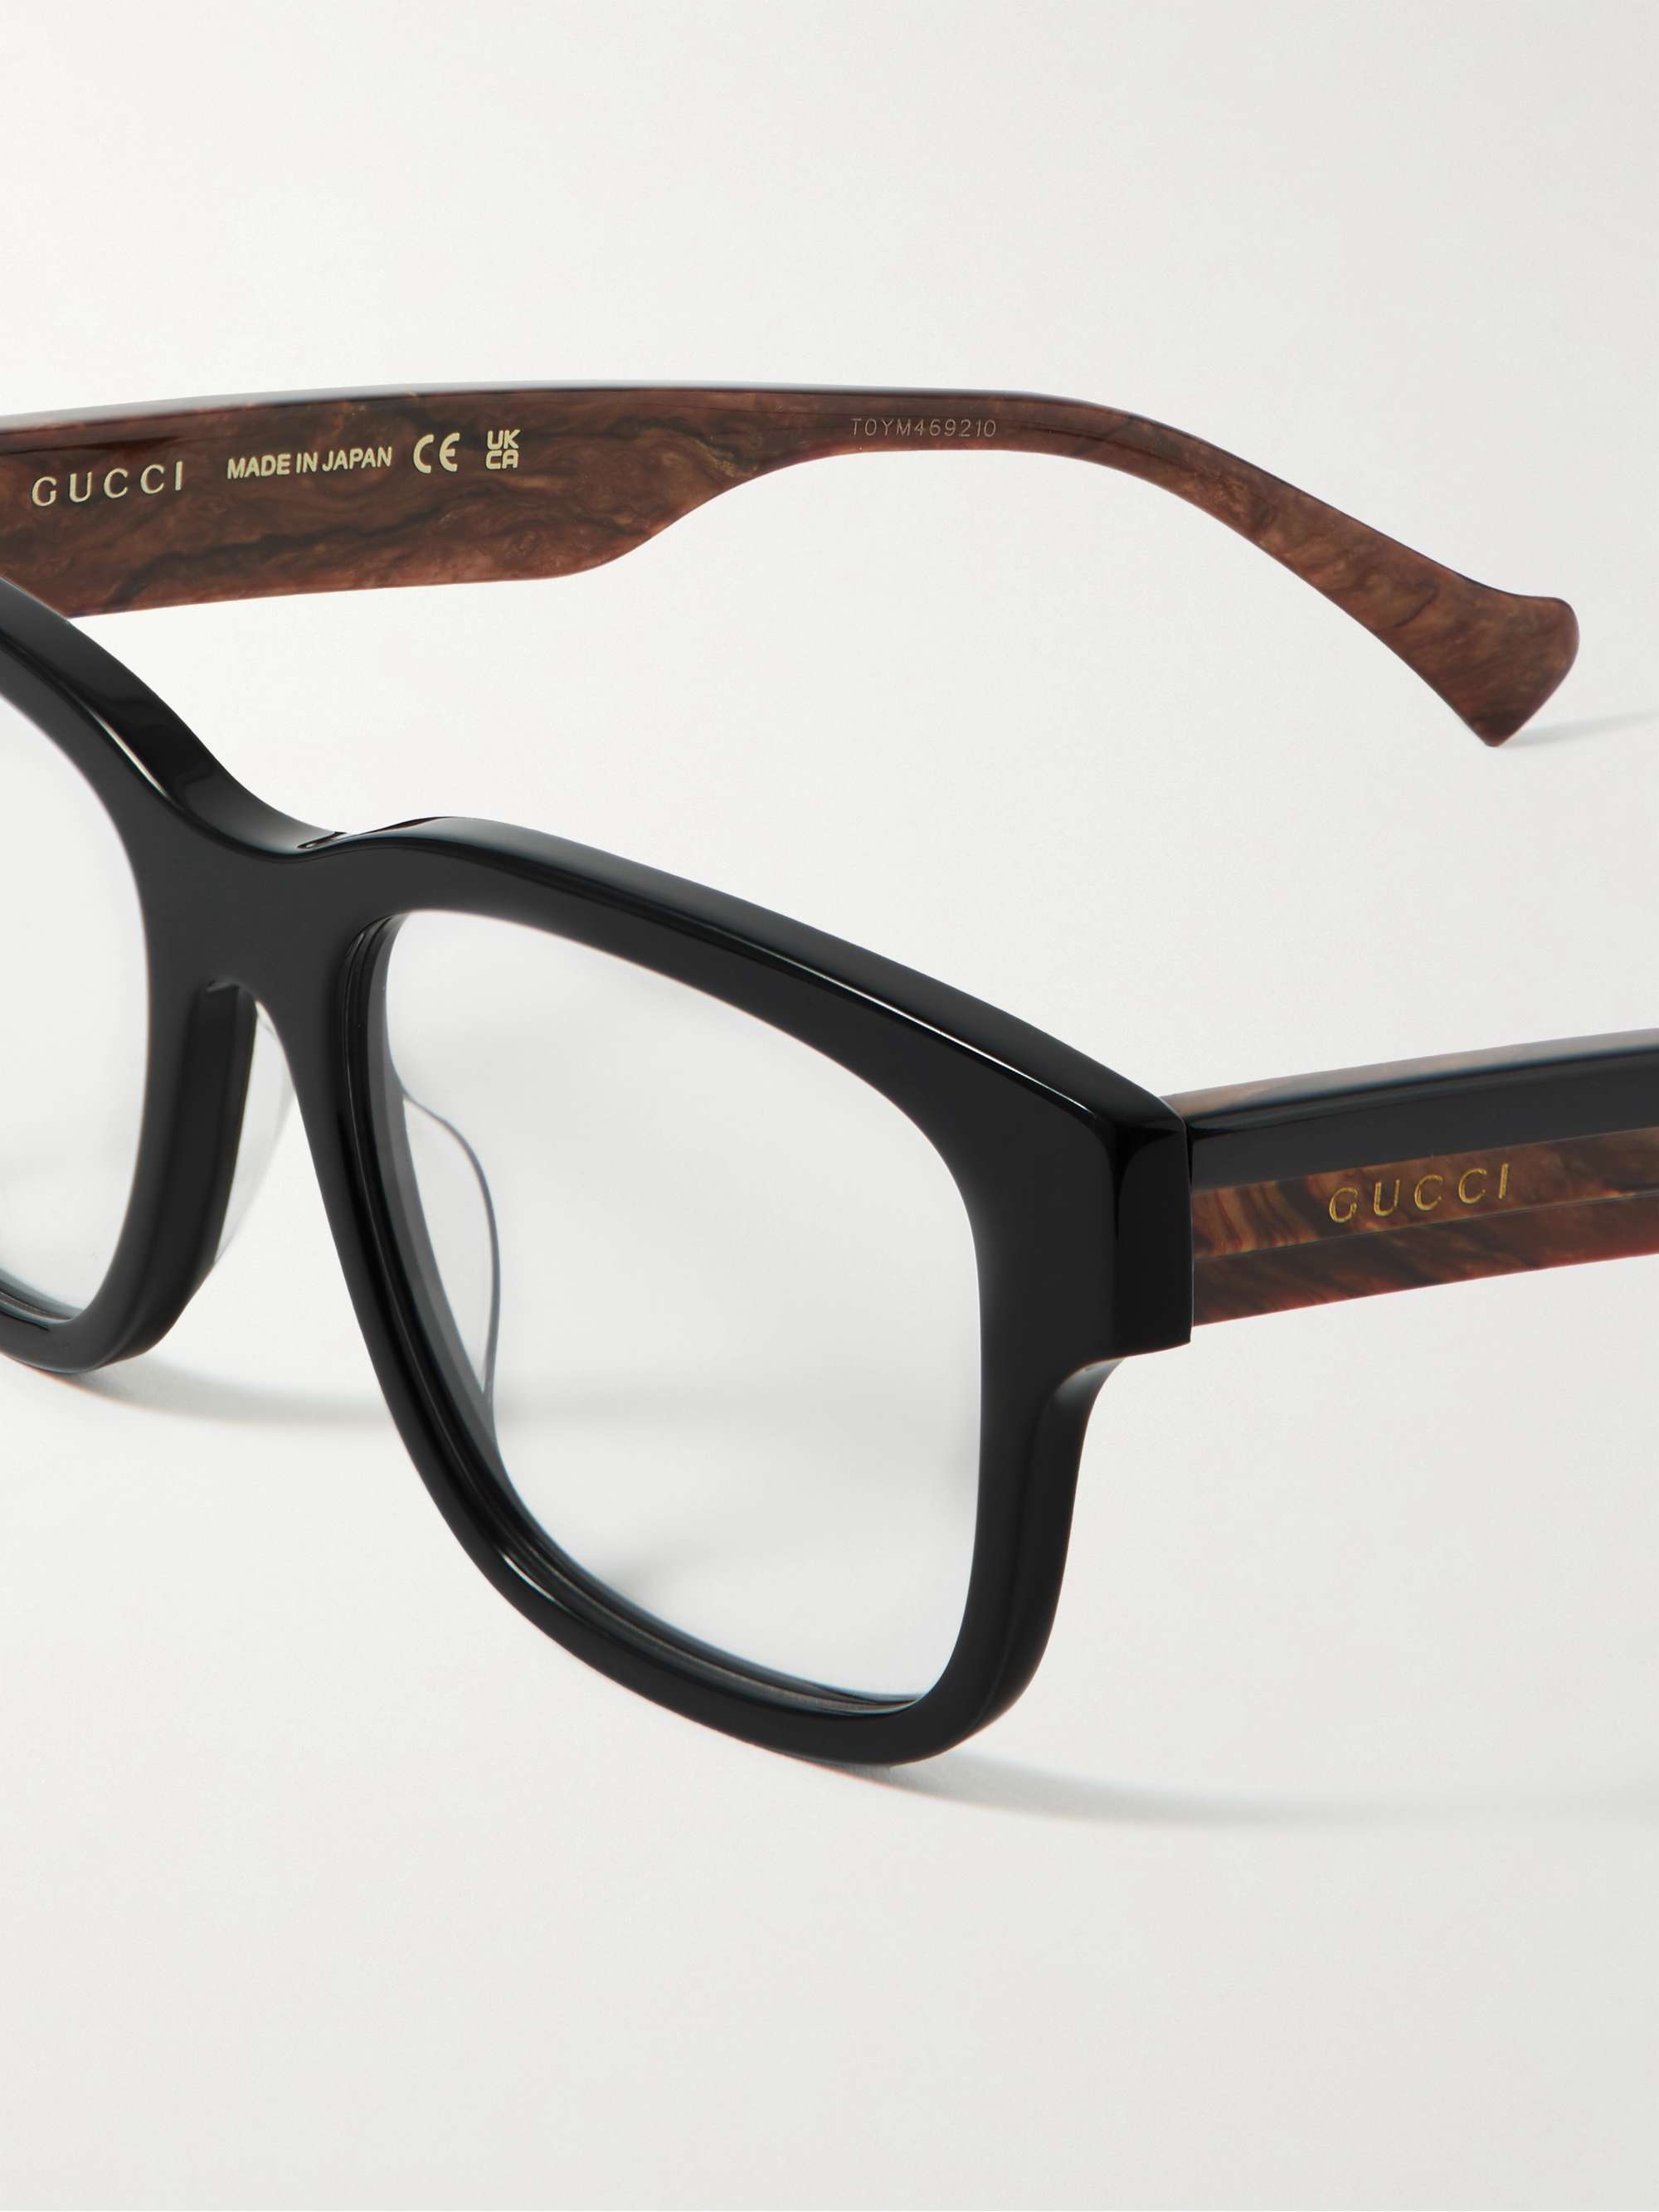 GUCCI EYEWEAR D-Frame Two-Tone Acetate Optical Glasses